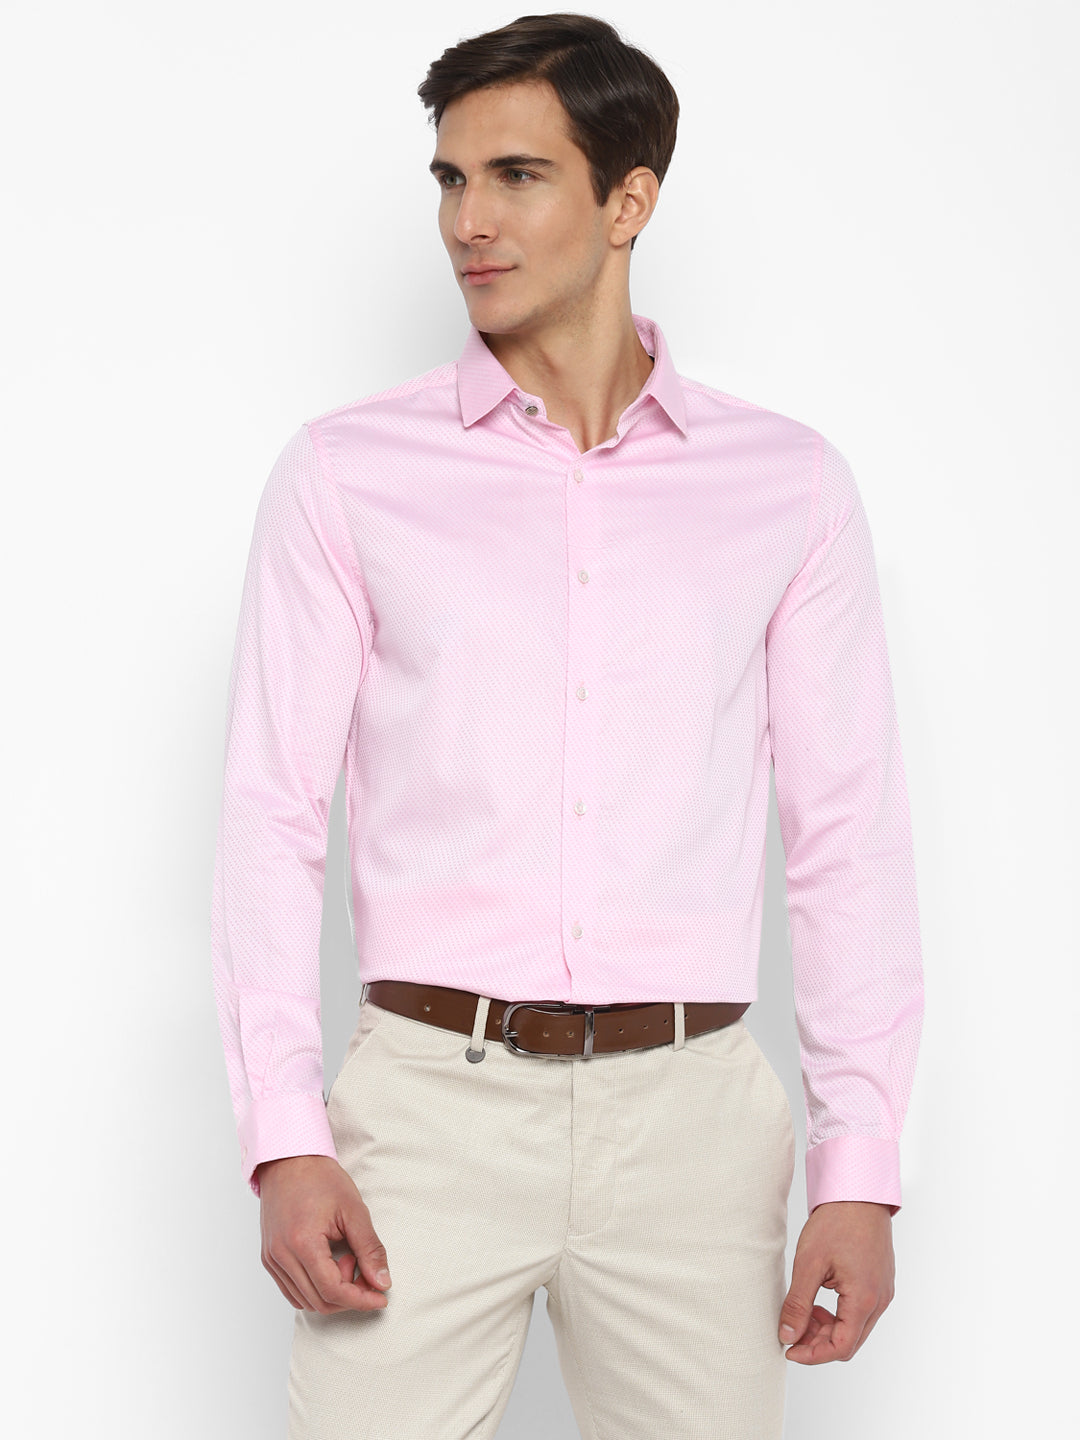 Smarty Pants Pink Printed Shirt